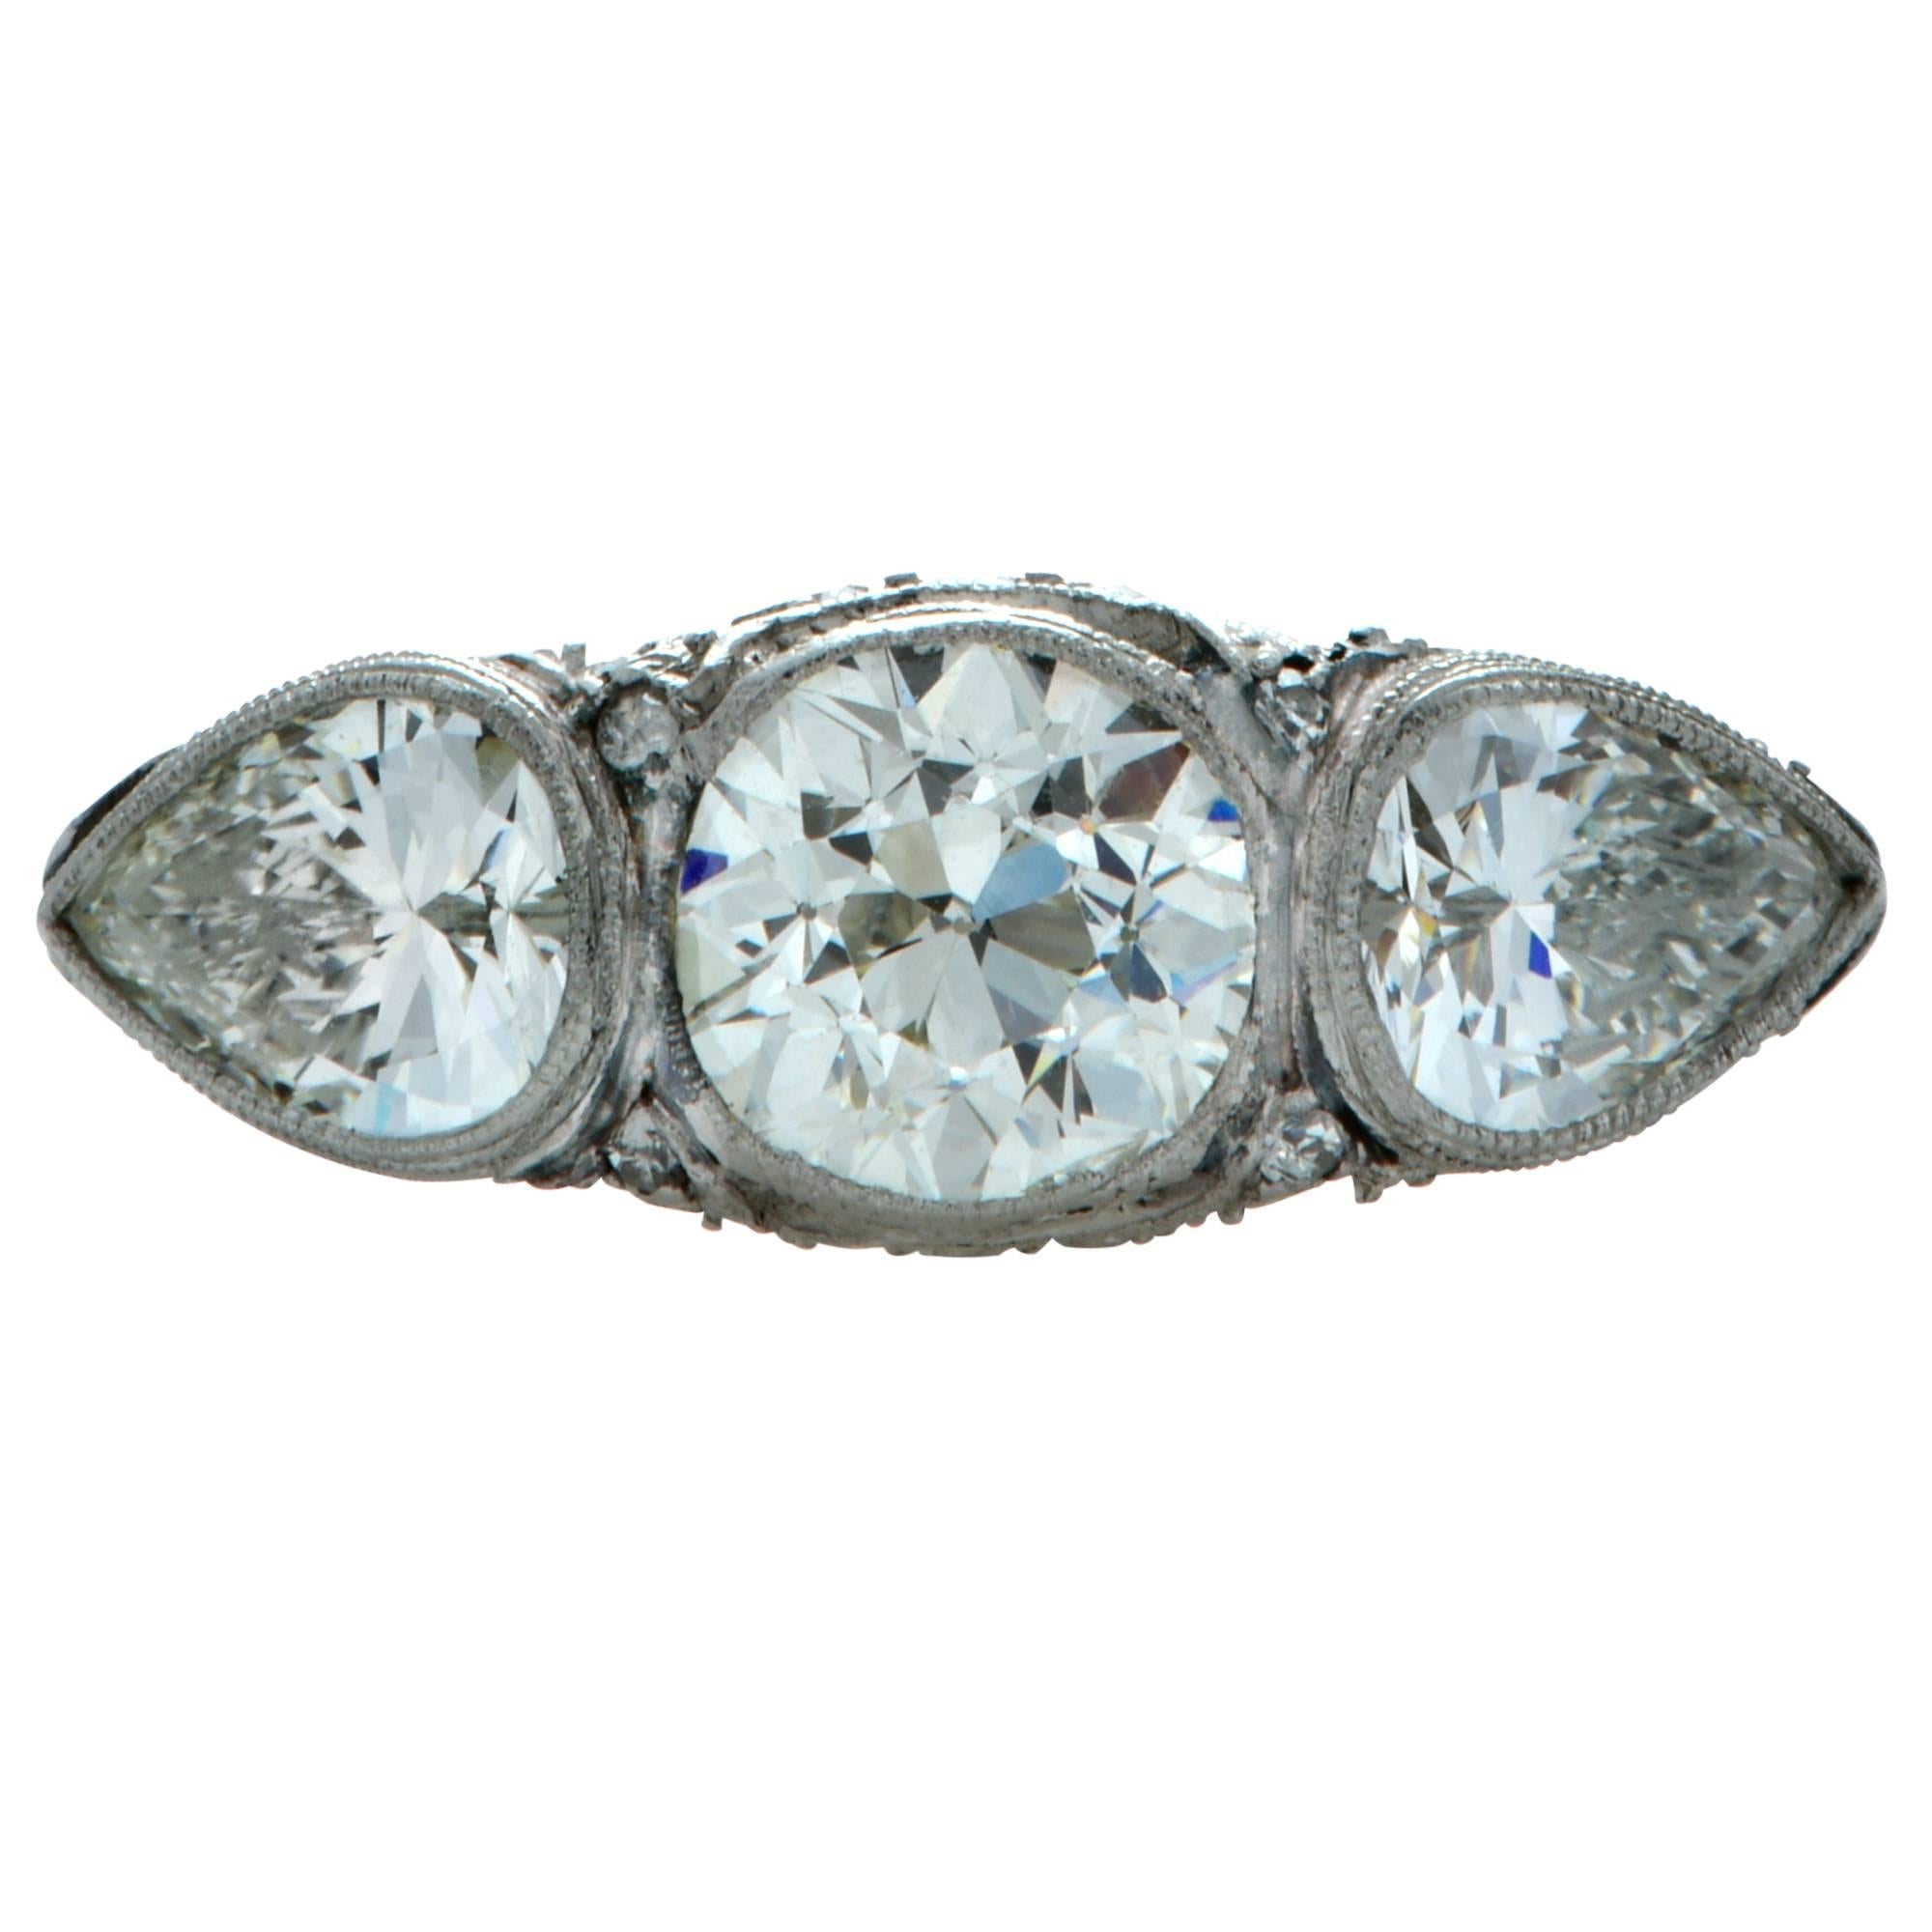 Women's Art Deco Old European Cut Diamond Engagement Ring Circa 1920s